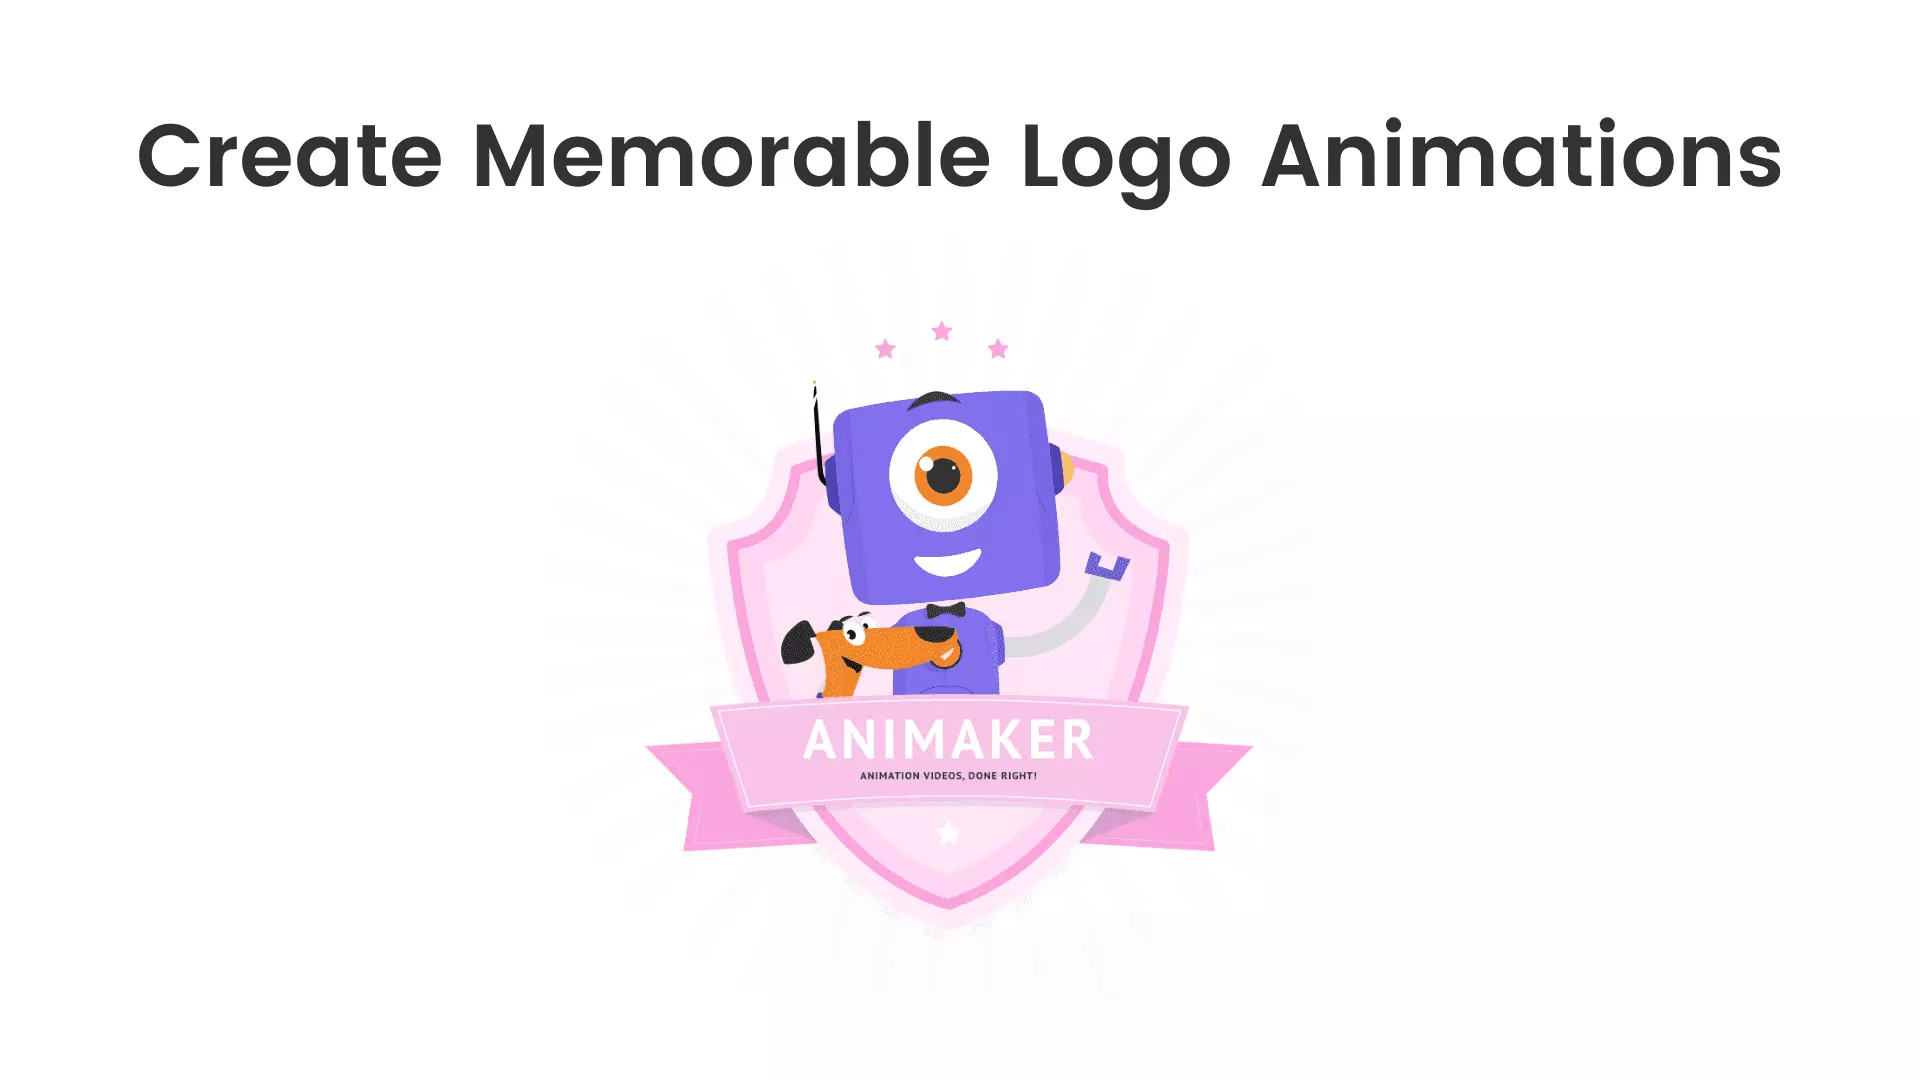 3d logo animation samples